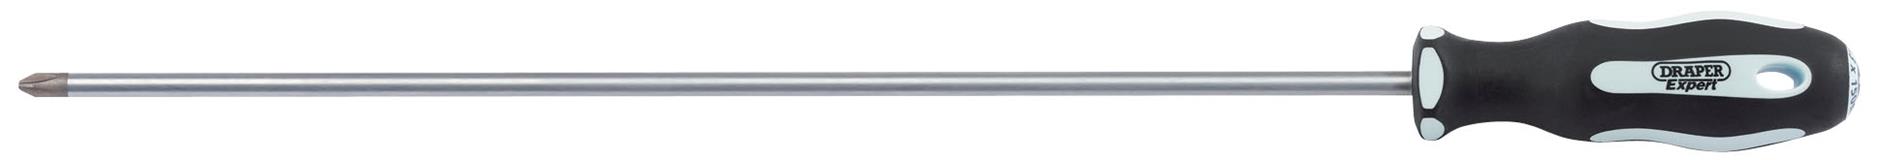 Draper 63594 �S) - Cross Slot Extra Long Reach Soft Grip Screwdriver (No.2 x 450mm)